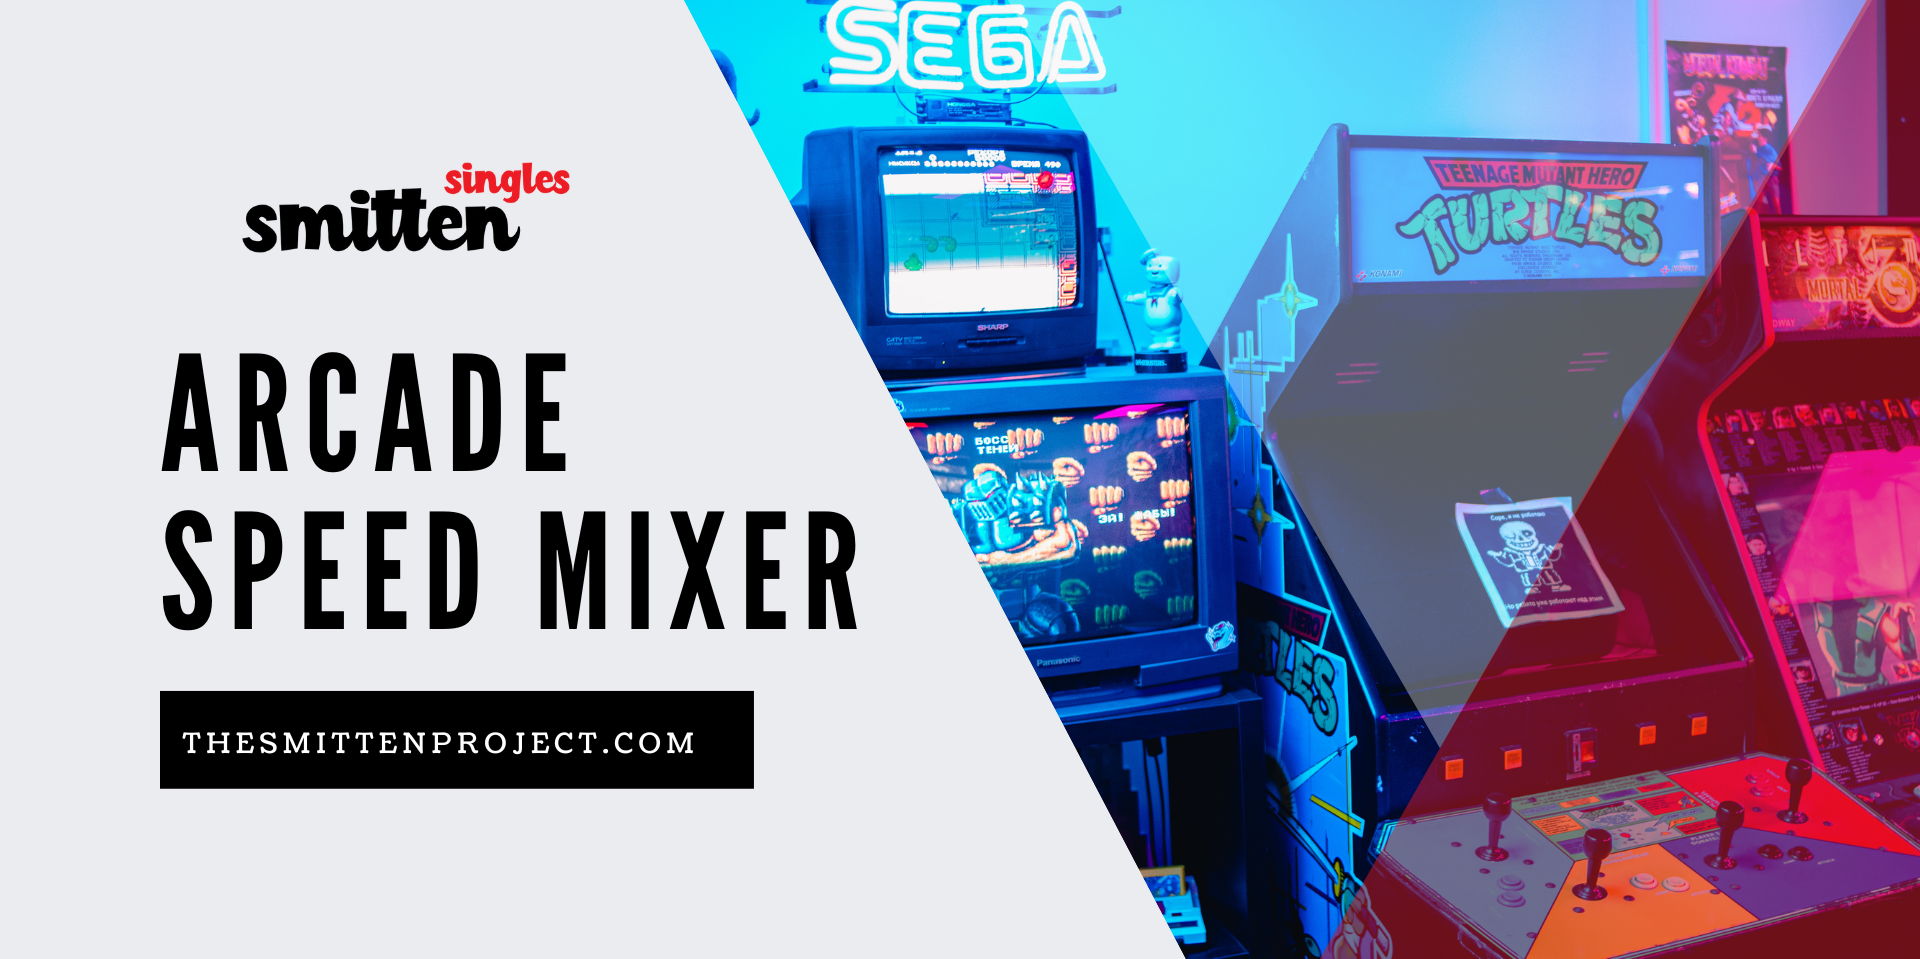 Singles Arcade Speed Mixer promotional image